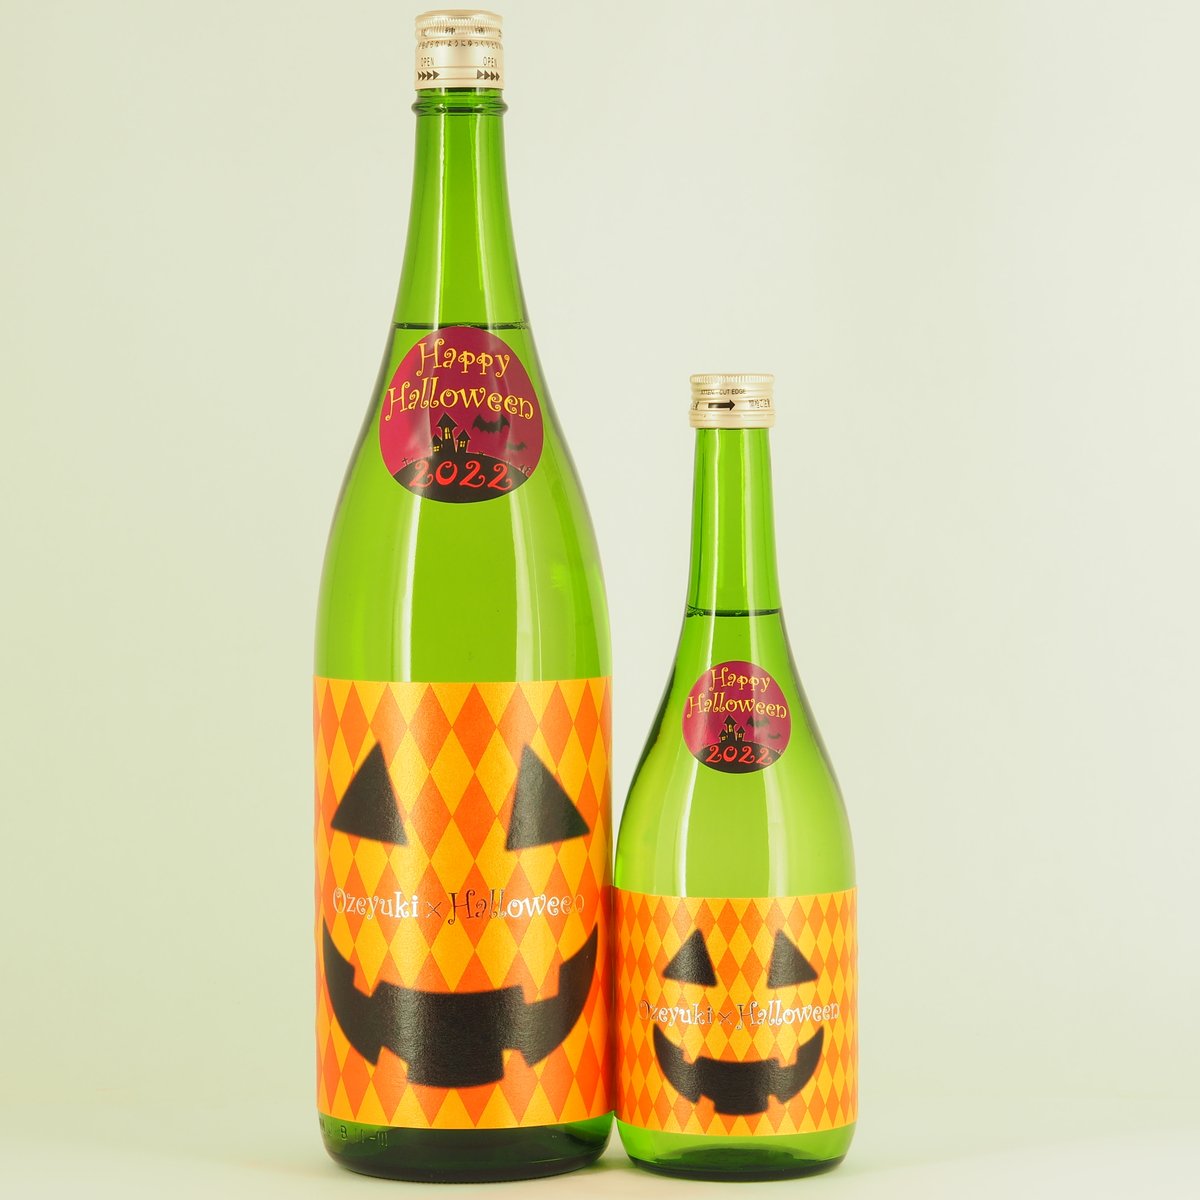 test ツイッターメディア - 【日本酒】
尾瀬の雪どけ 純米大吟醸 
ハロウィン専用酒
入荷致しました！

※9/22(木)店頭販売開始予定

かぼちゃのラベルが可愛らしい
ハロウィン専用の日本酒です！

詳しくはブログで！
https://t.co/2PZ30s0c3u
オンラインショップ
https://t.co/CerbTtMABj https://t.co/doP5irP0VZ